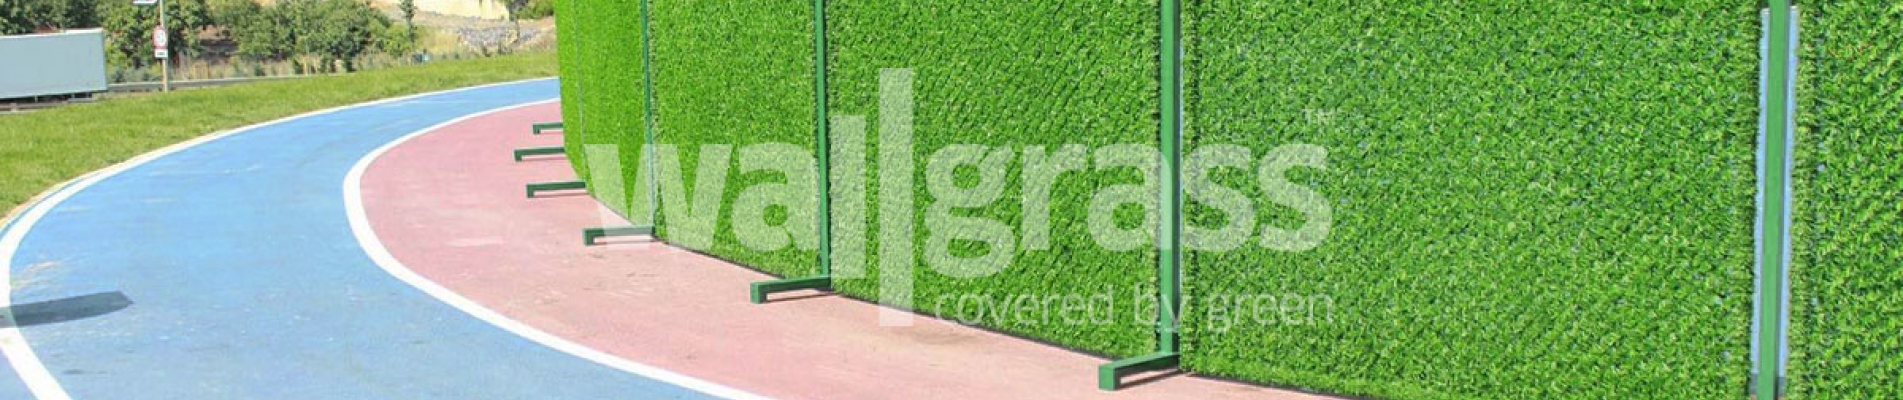 Grass Fence Panel Installation